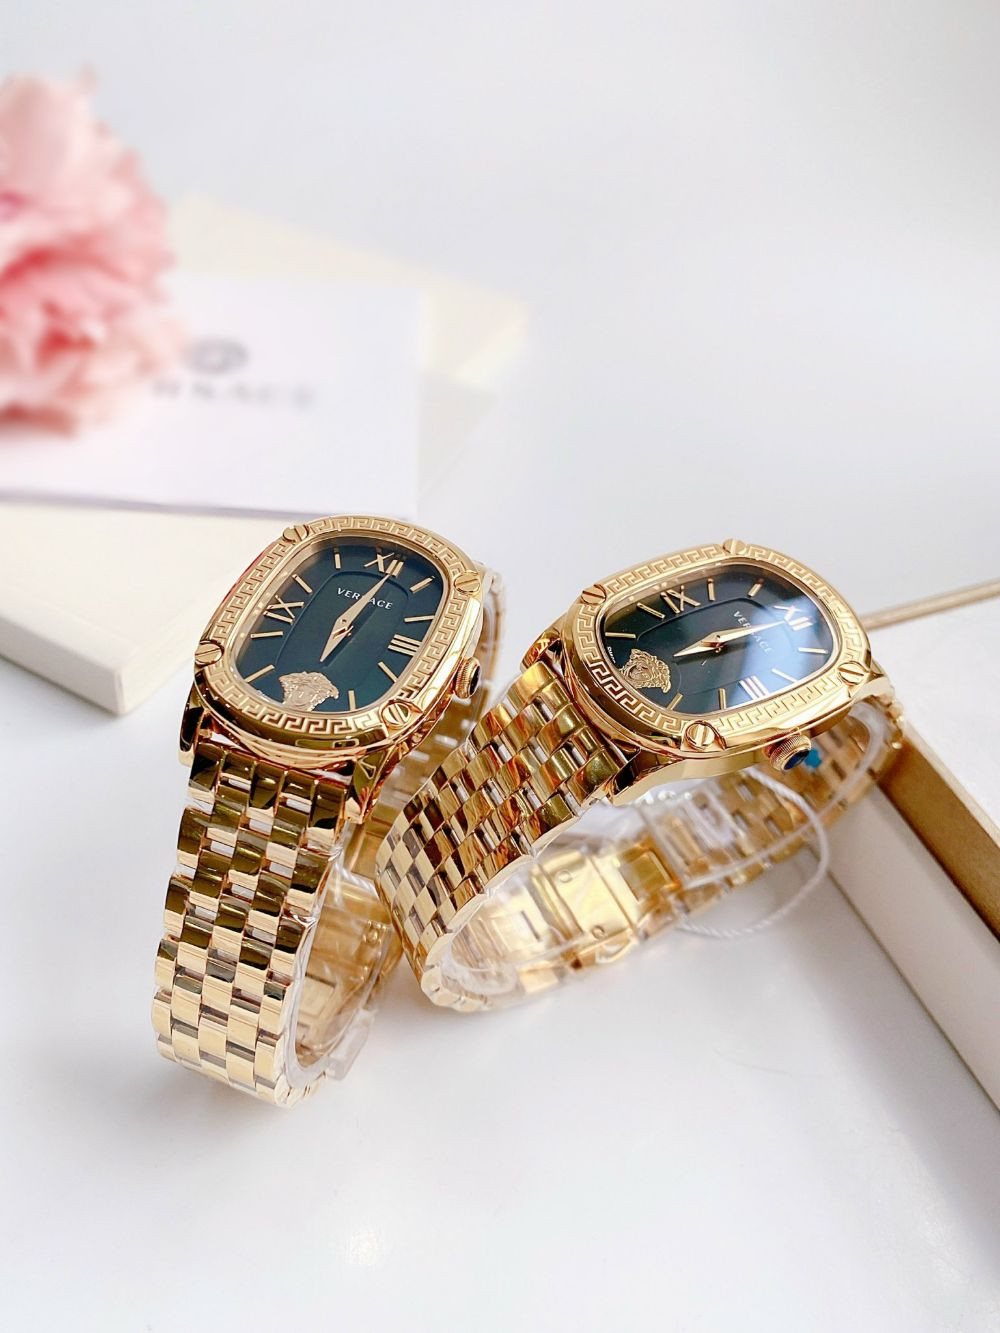 Đồng hồ Versace Couture bản dây gold mặt đen Case 35mm